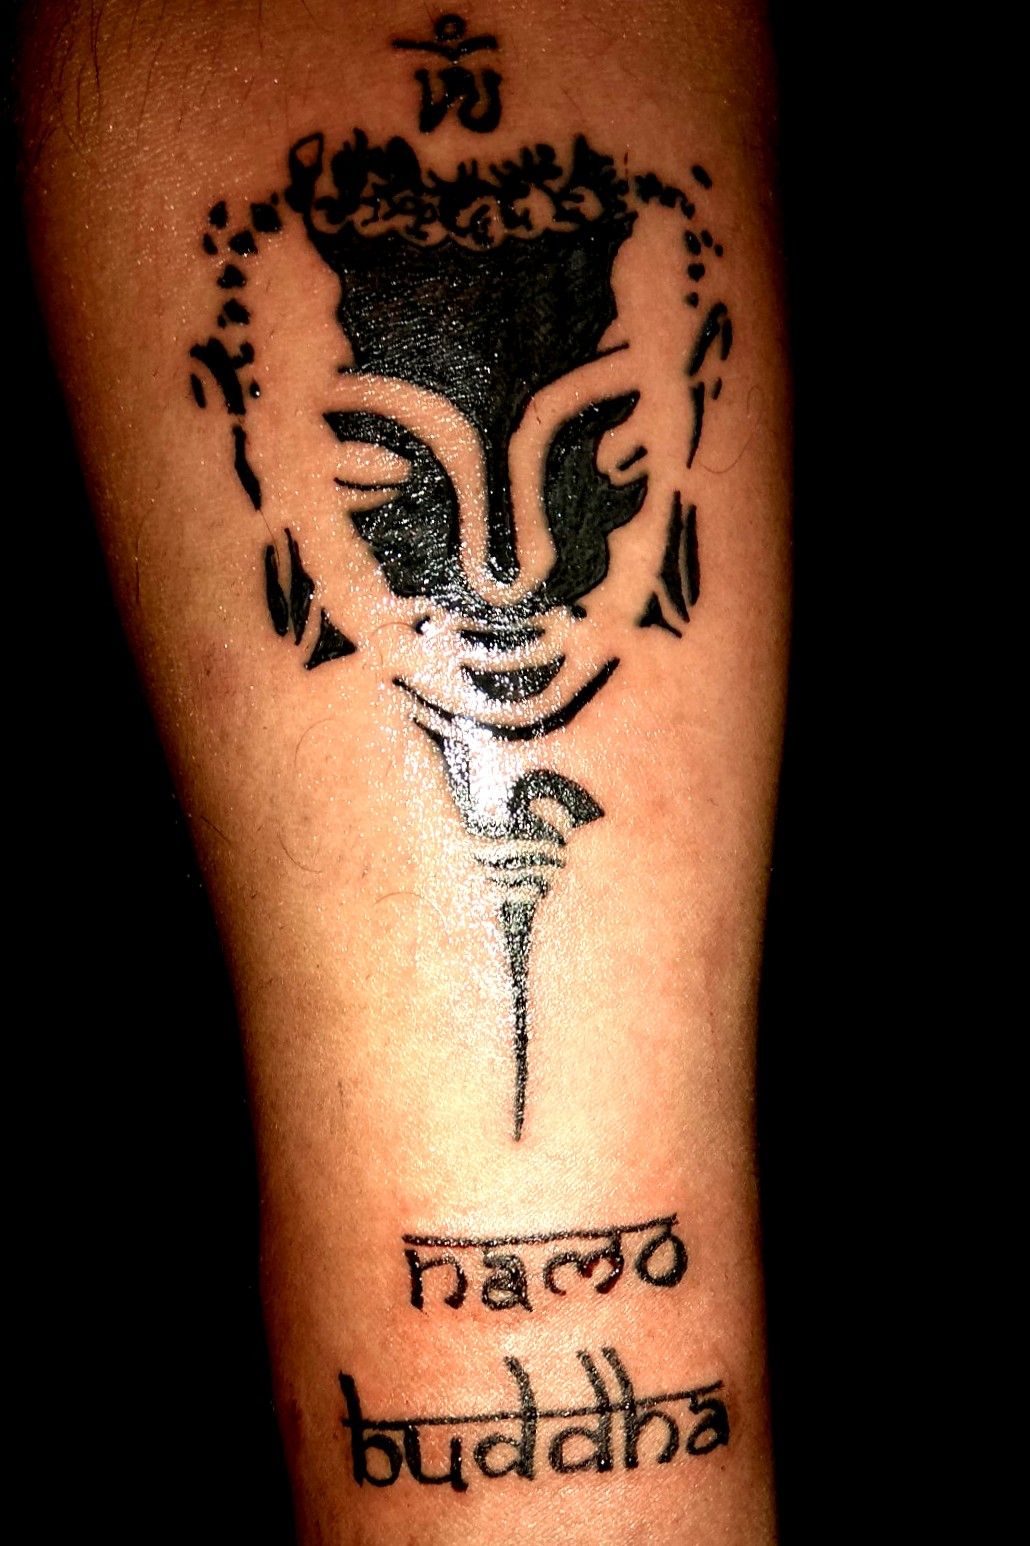 stylish tattoos  Satya name  sk cursive art  how to make a stylish  tattoos   YouTube